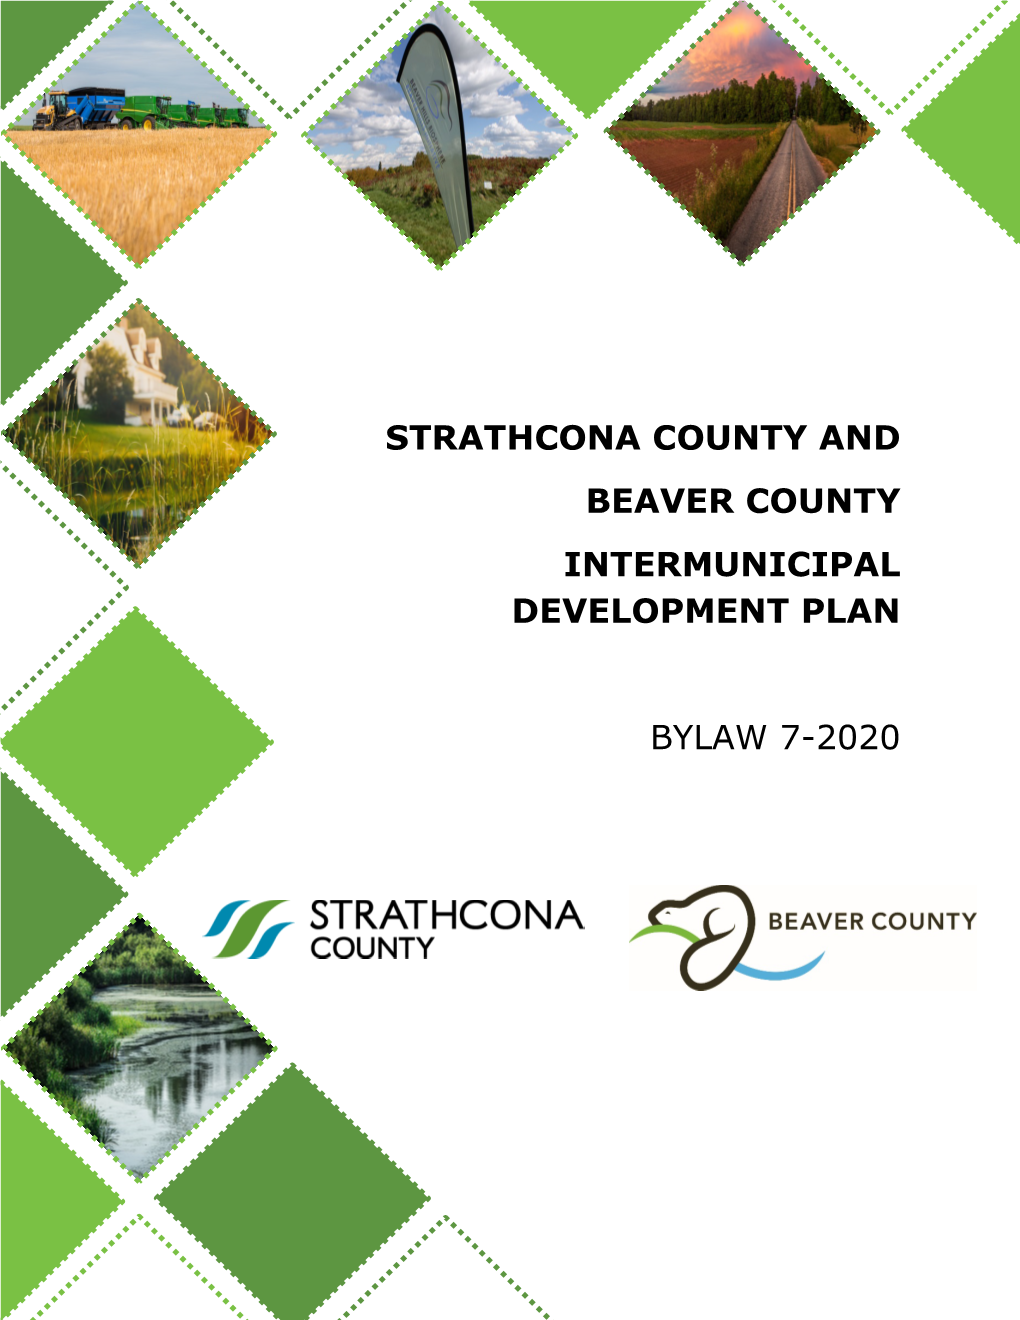 Strathcona County and Beaver County Intermunicipal Development Plan